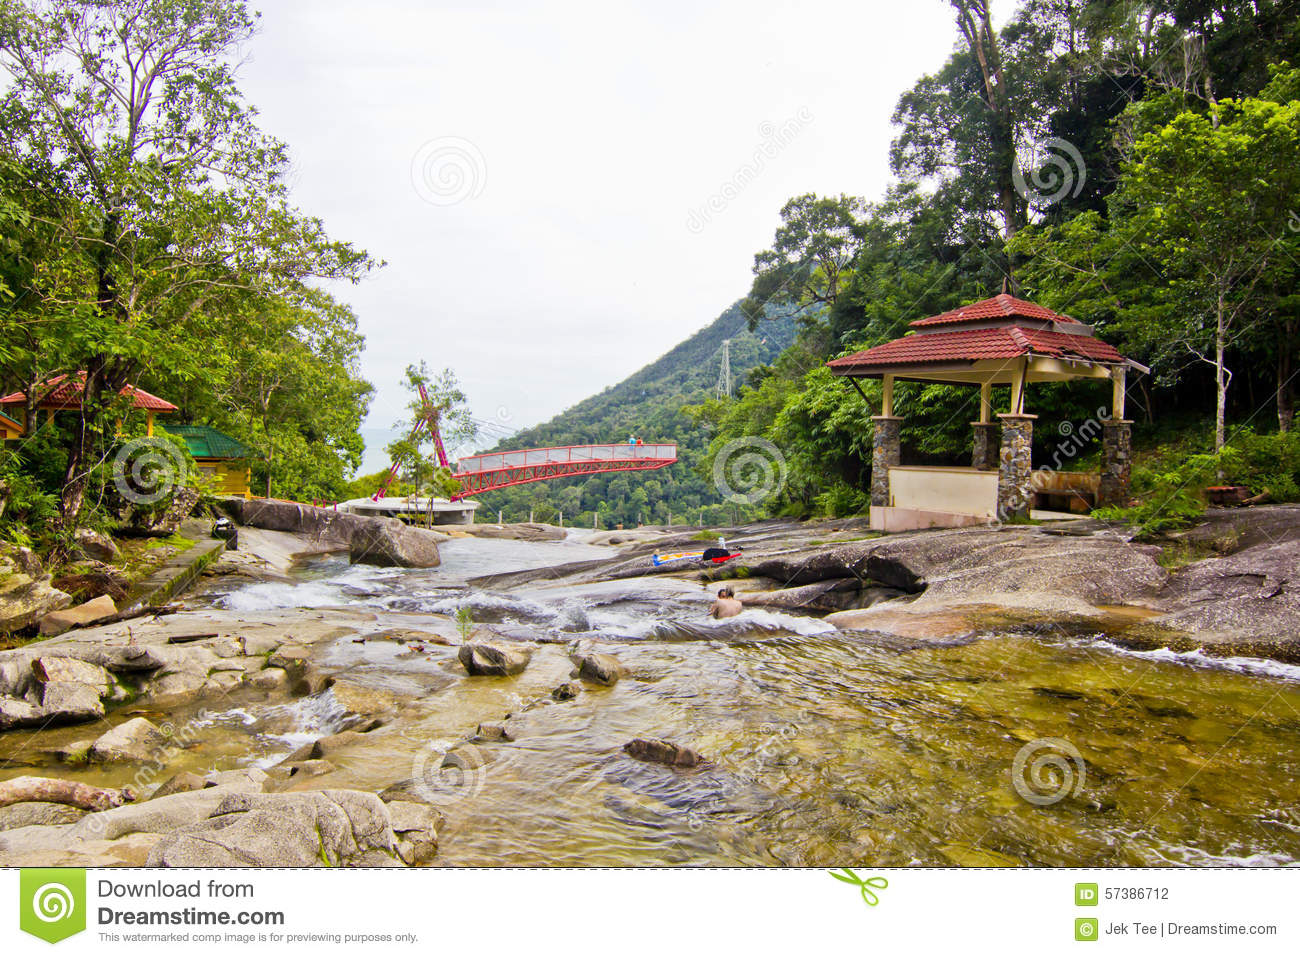 telaga-tujuh-waterfall-pulau-langkawi-kedah-malaysia-also-named-as-seven-wells-seven-pools-formed-top-waterfalls-57386712.jpg